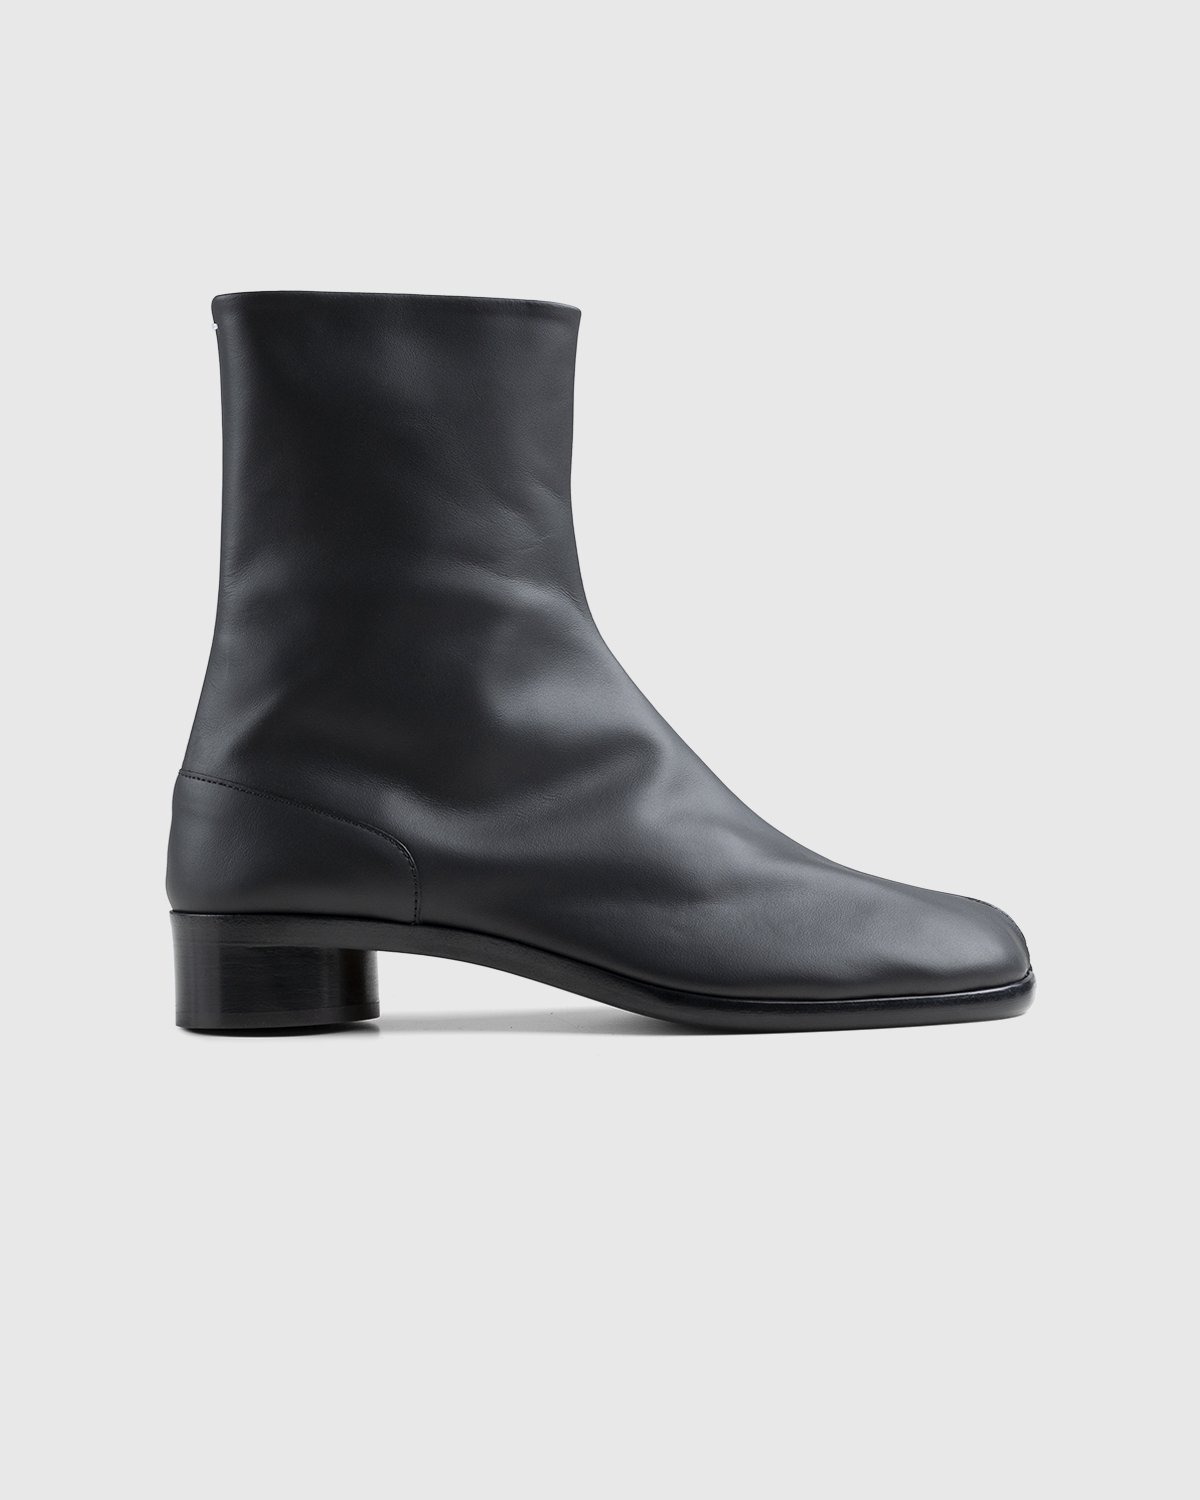 Maison Margiela - Tabi Ankle Boot Black - Footwear - Black - Image 1